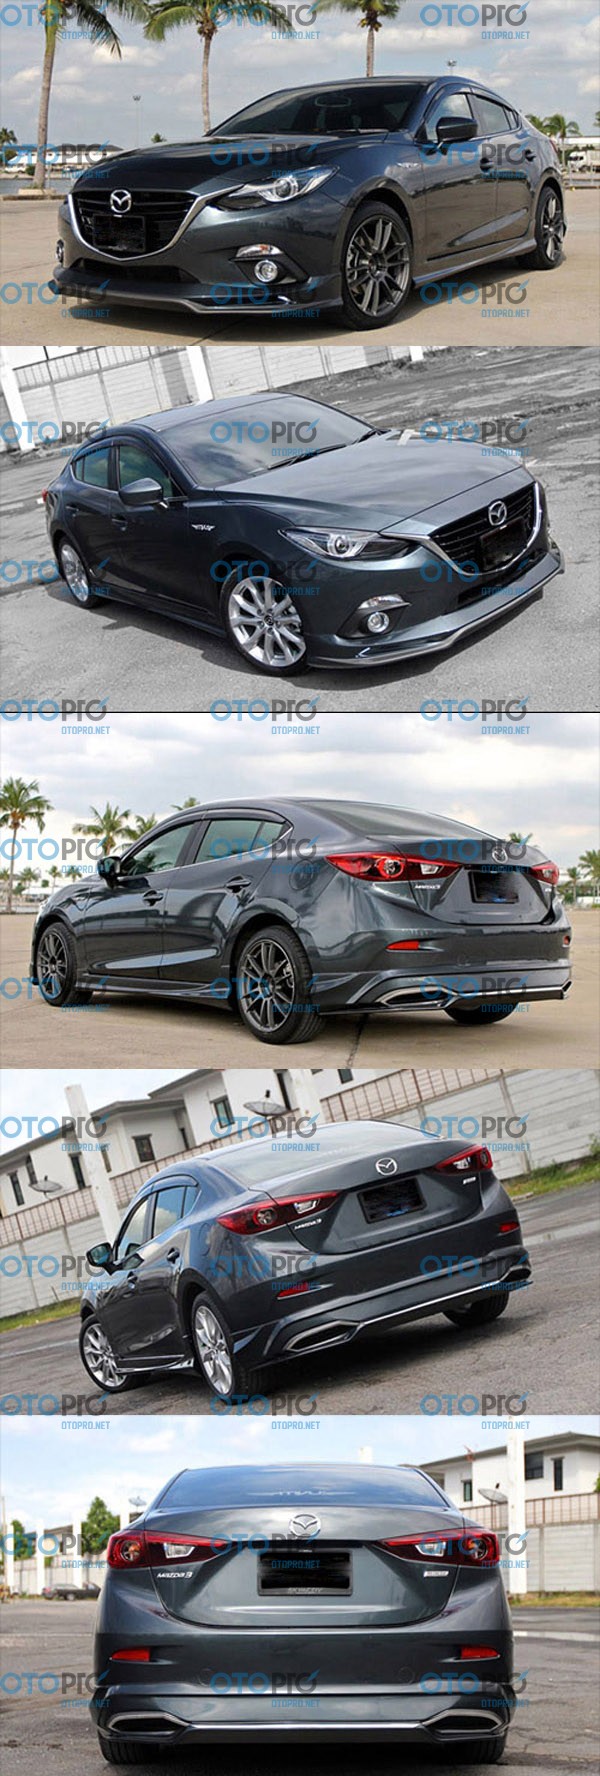 Bodylip cho Mazda3 All New 2015-2016 mẫu Ativus